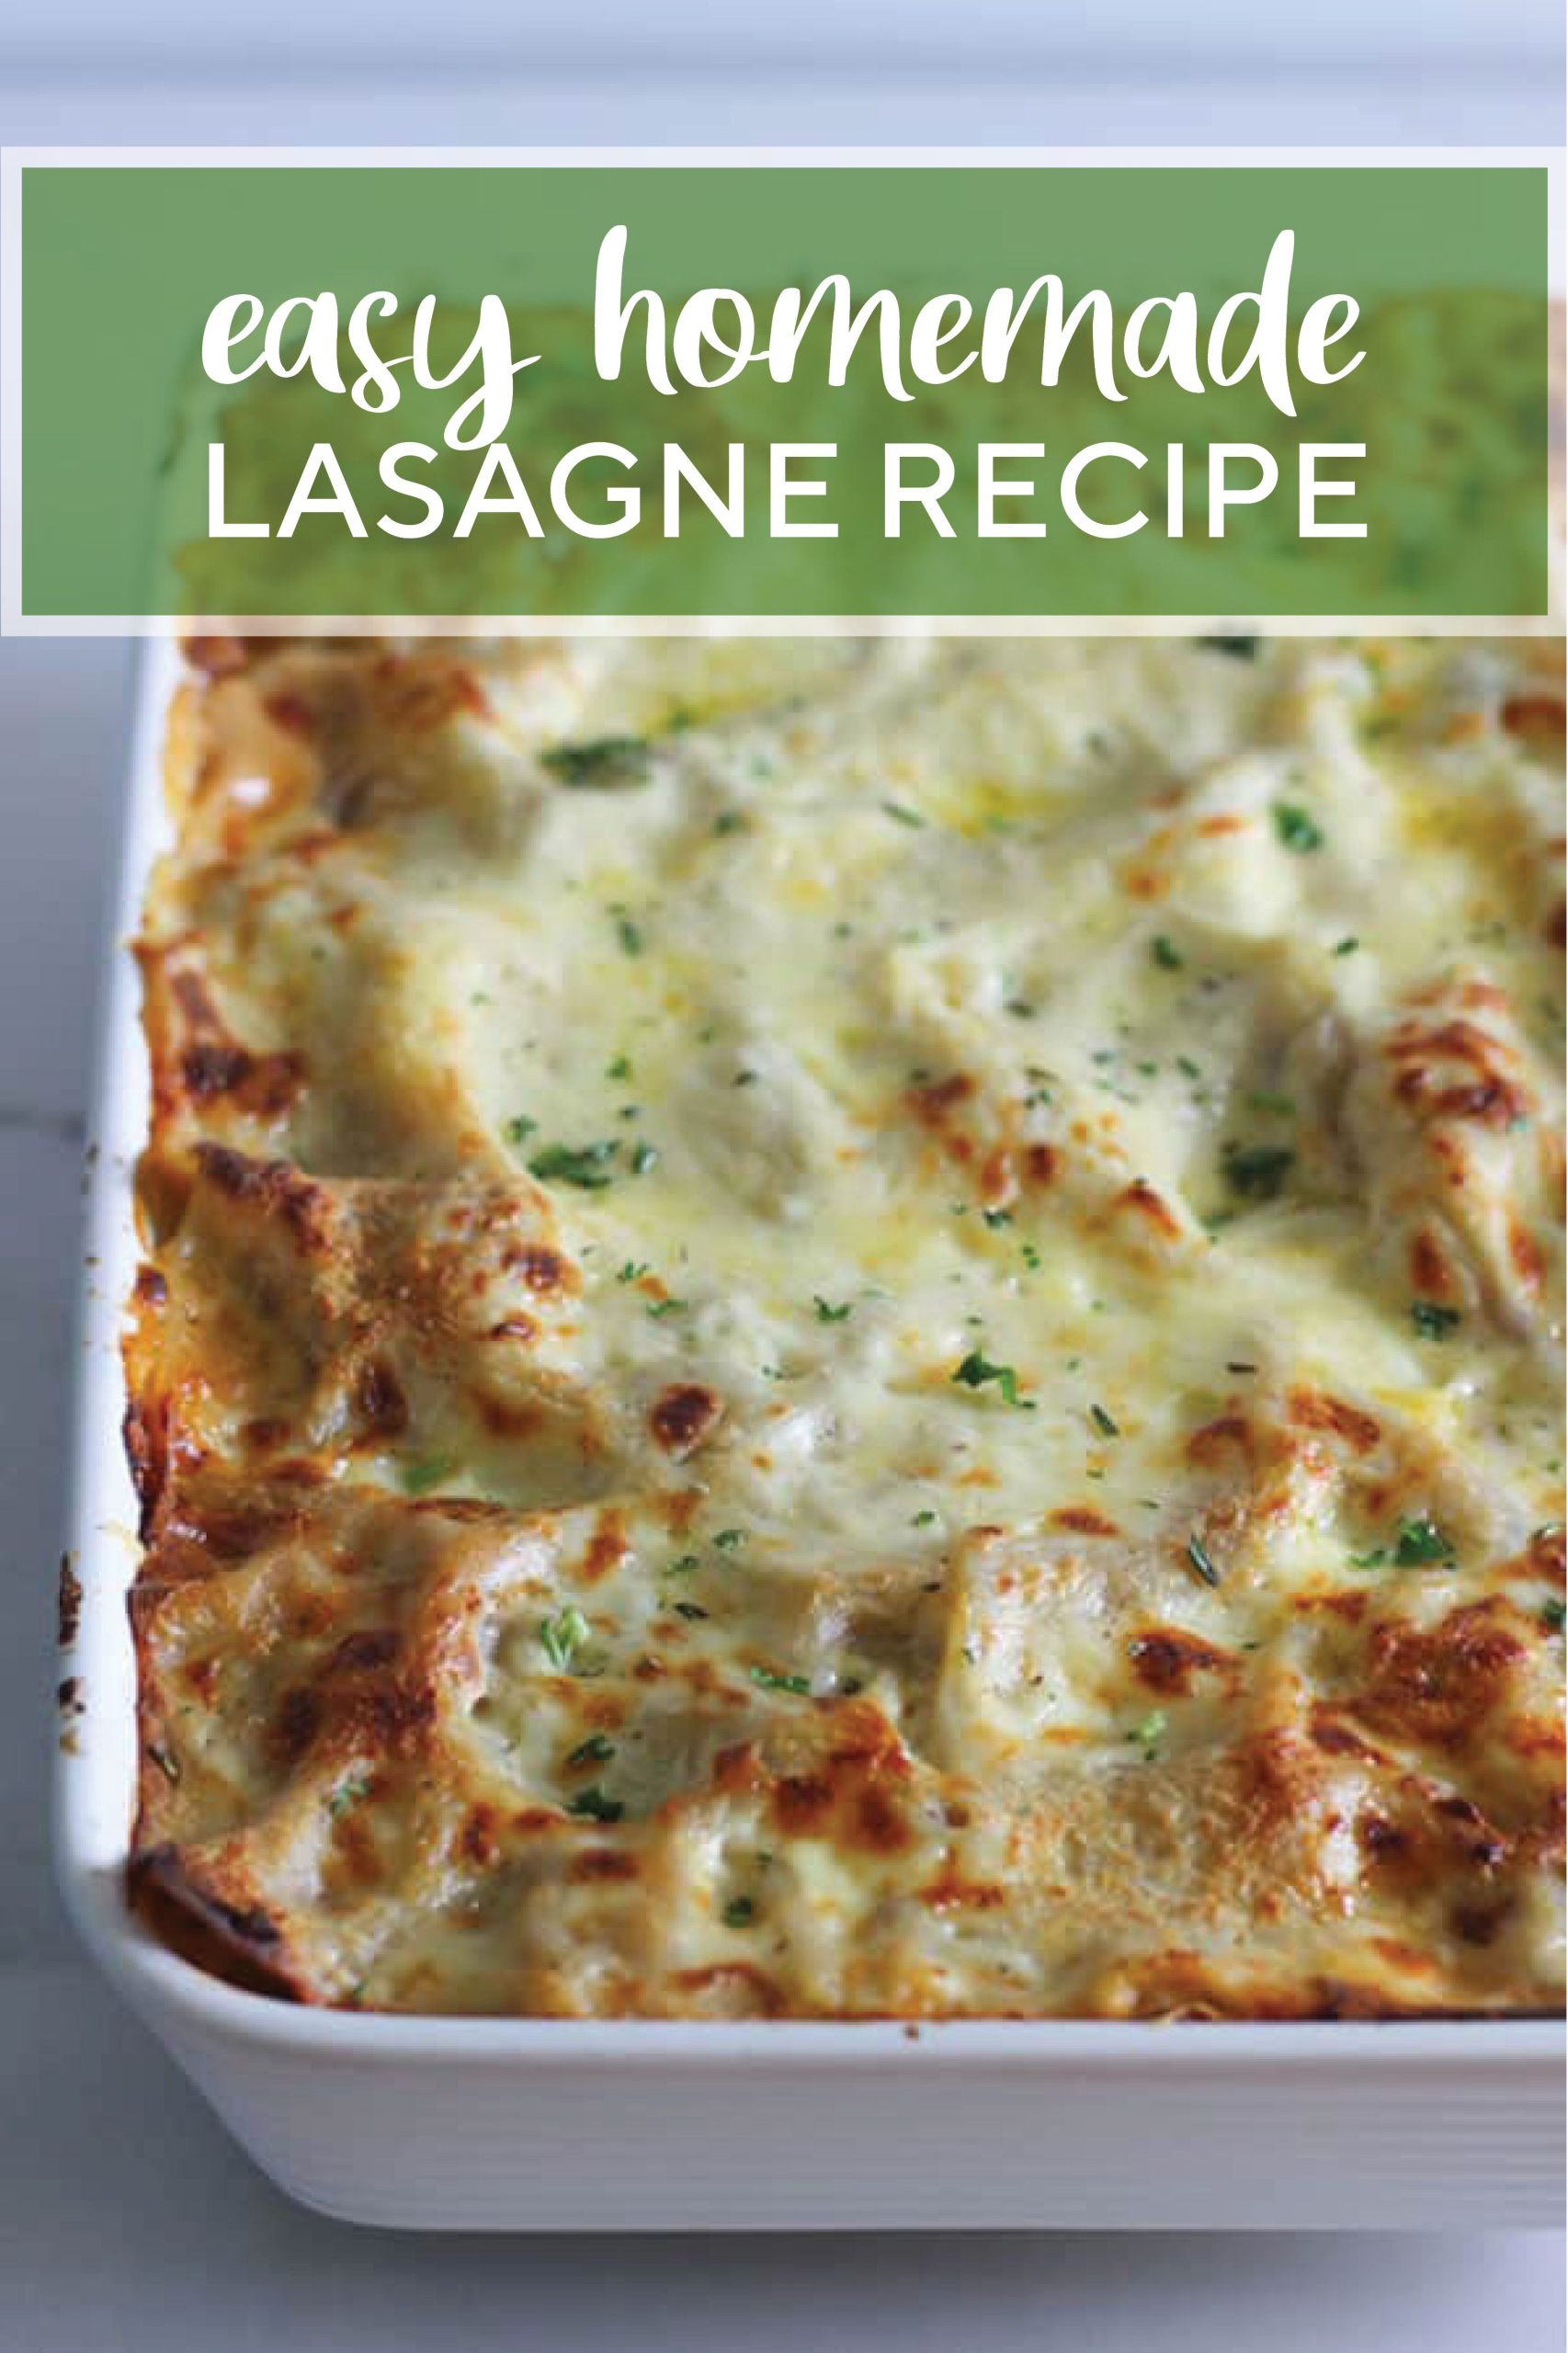 Easy Lasagne Recipe